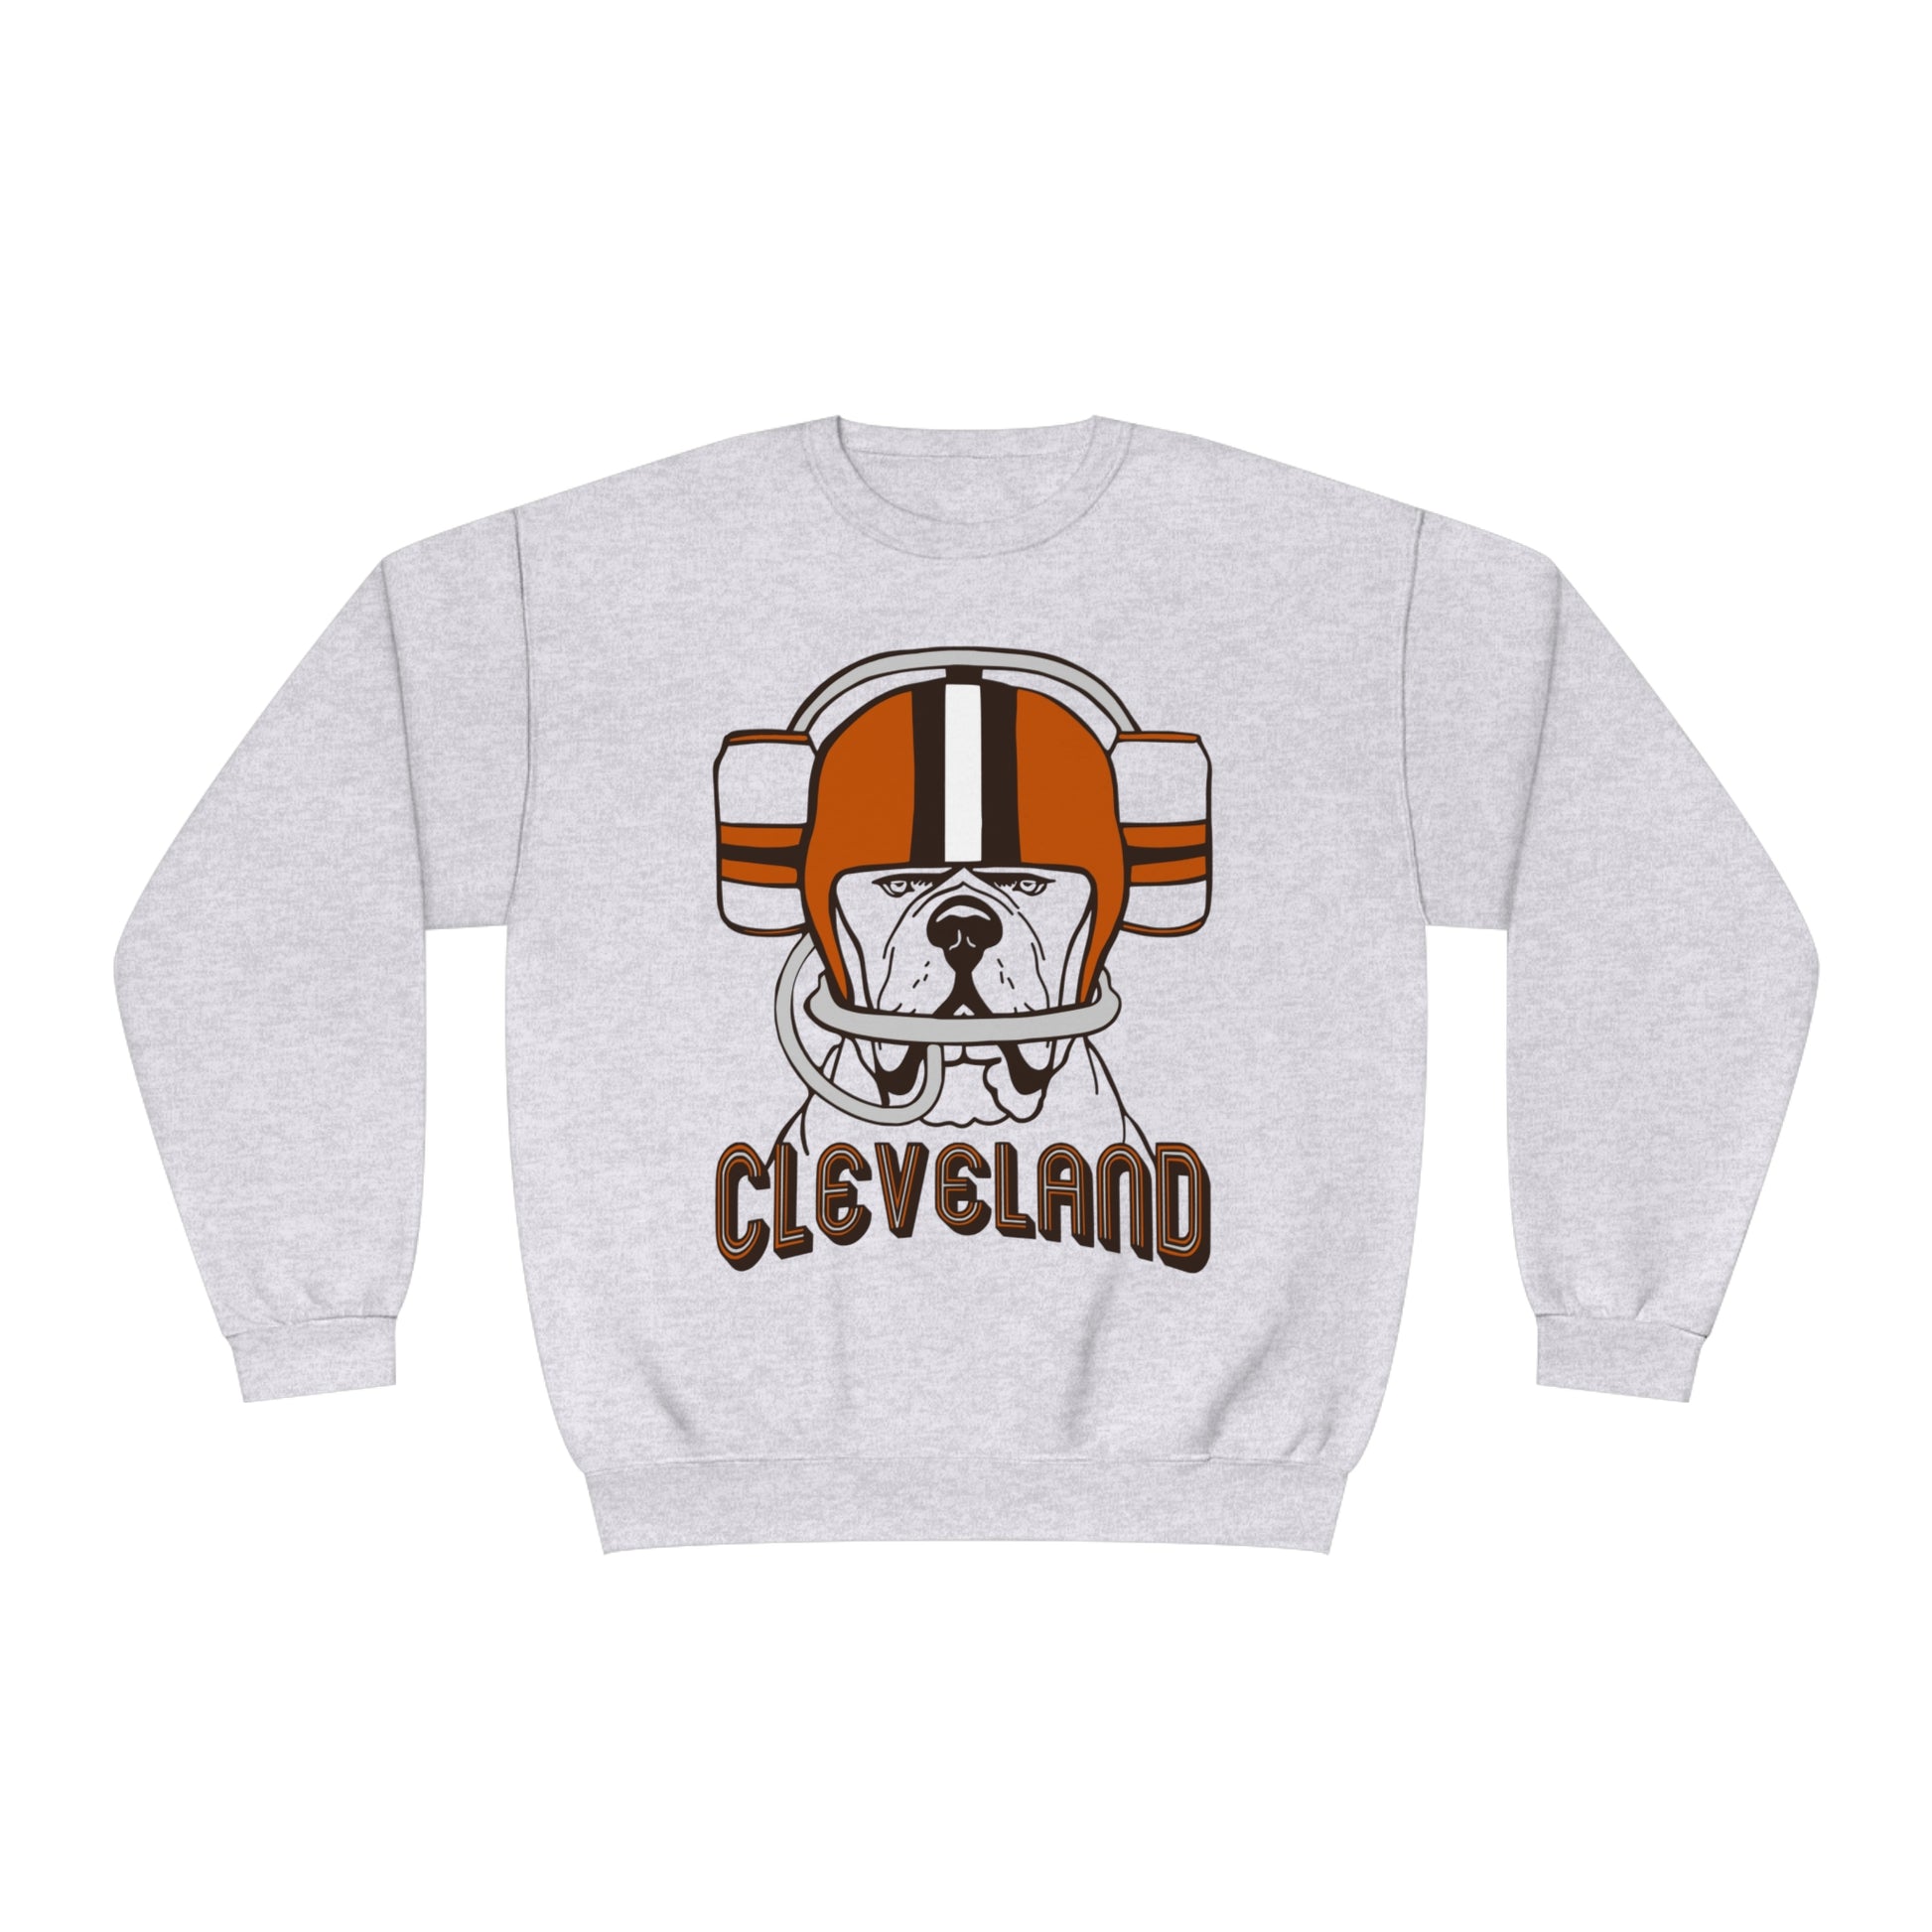 Cleveland Browns Beer Helmet Dog Crewneck Sweatshirt - Vintage Cleveland Browns Hoodie - Men's Women's Apparel Tee - Design 7